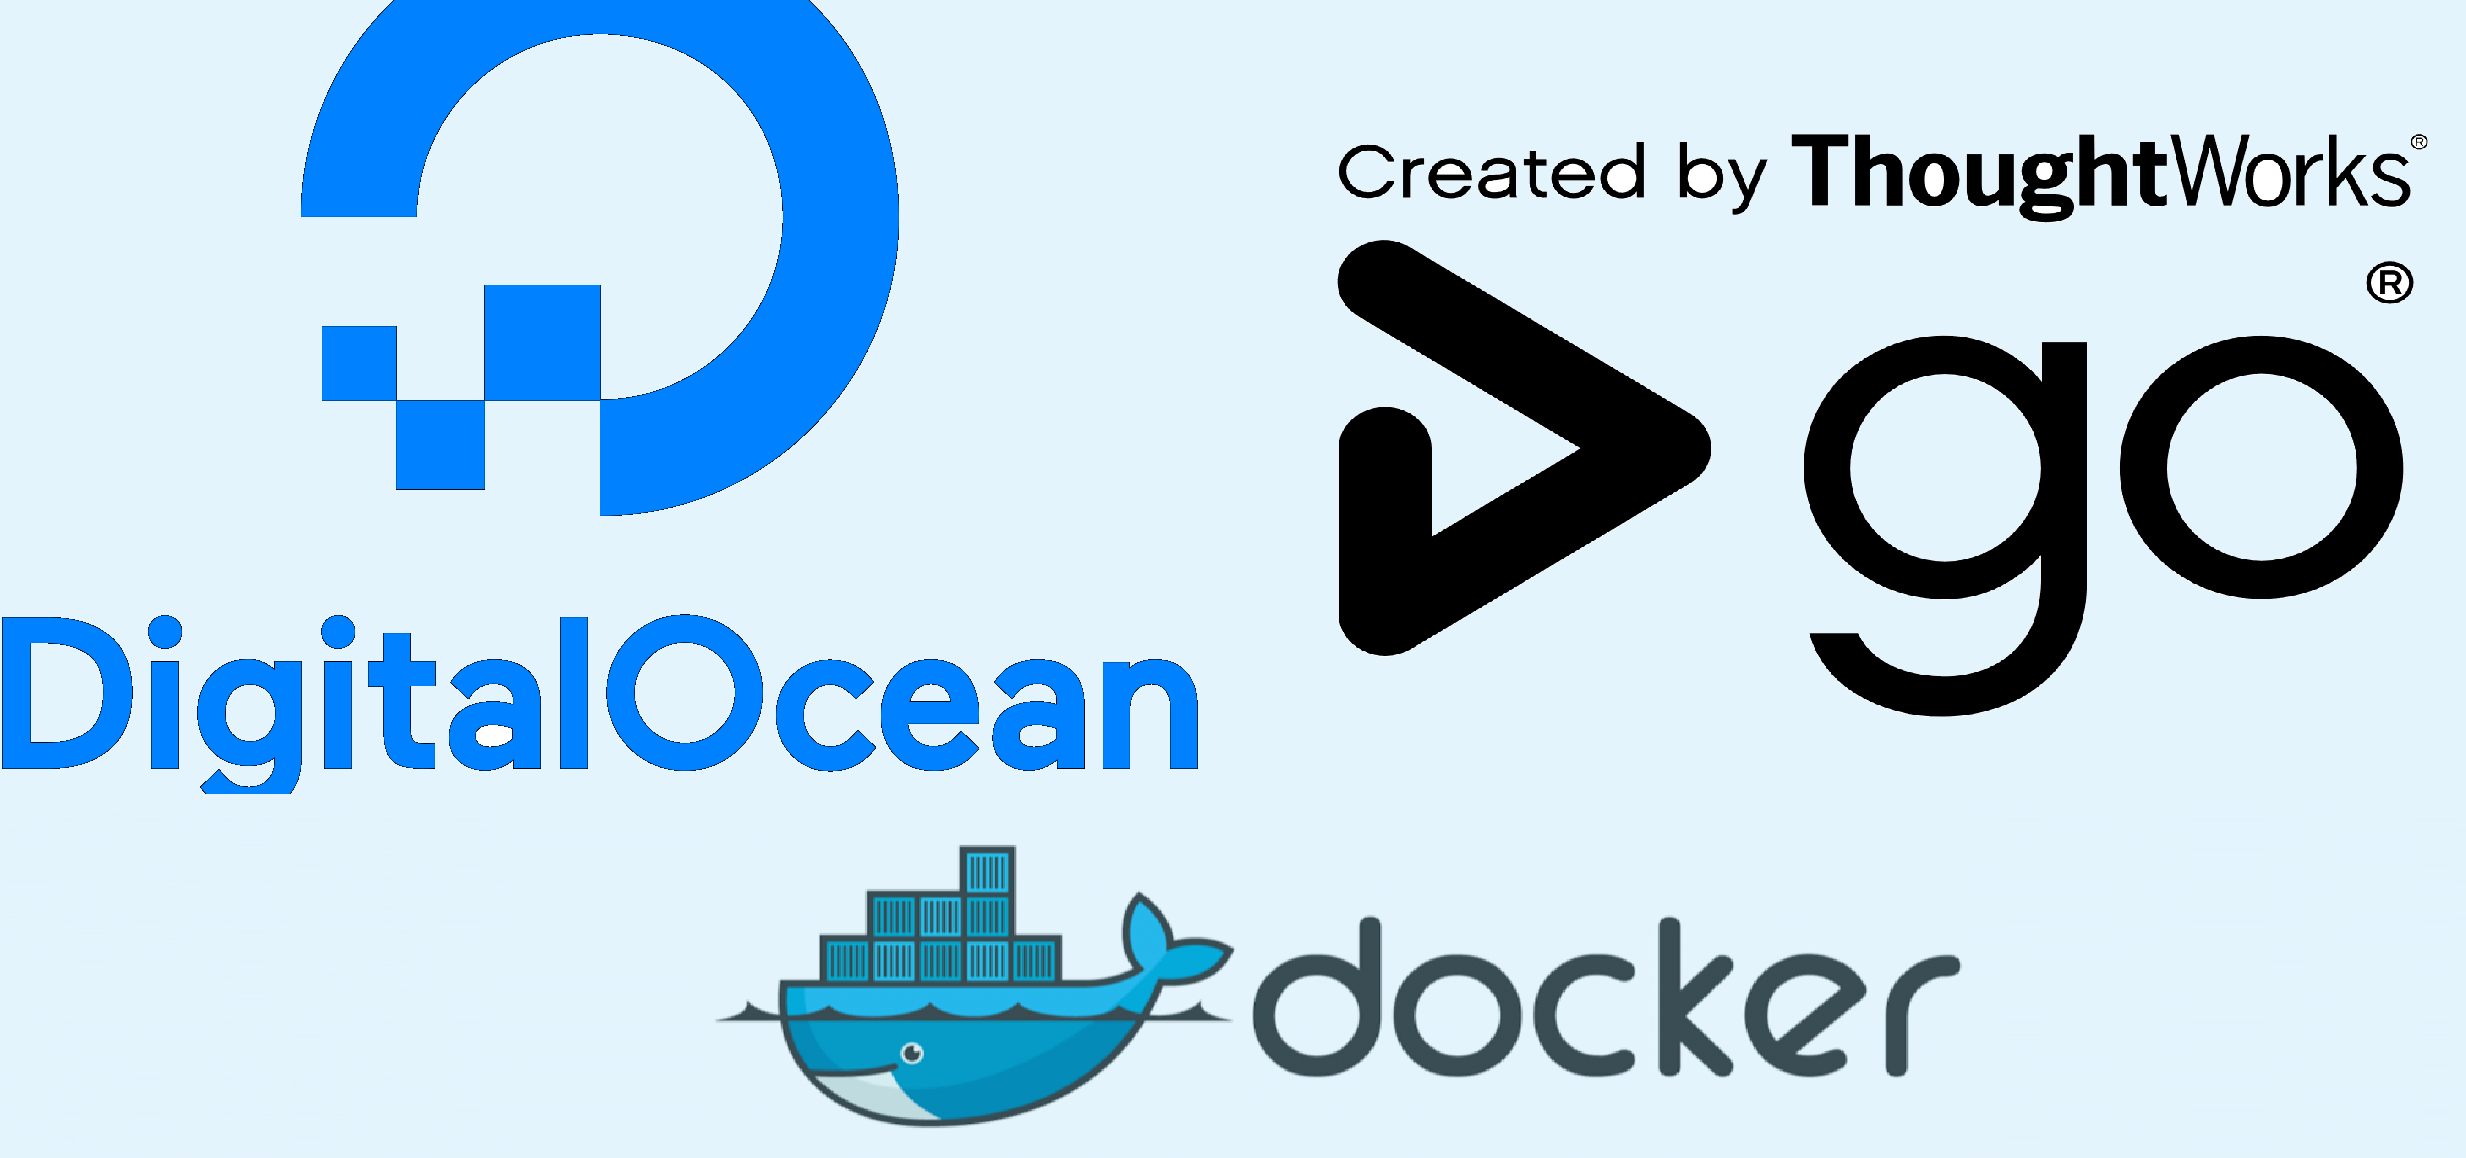 Use GoCD to deploy a single Docker image to DigitalOcean